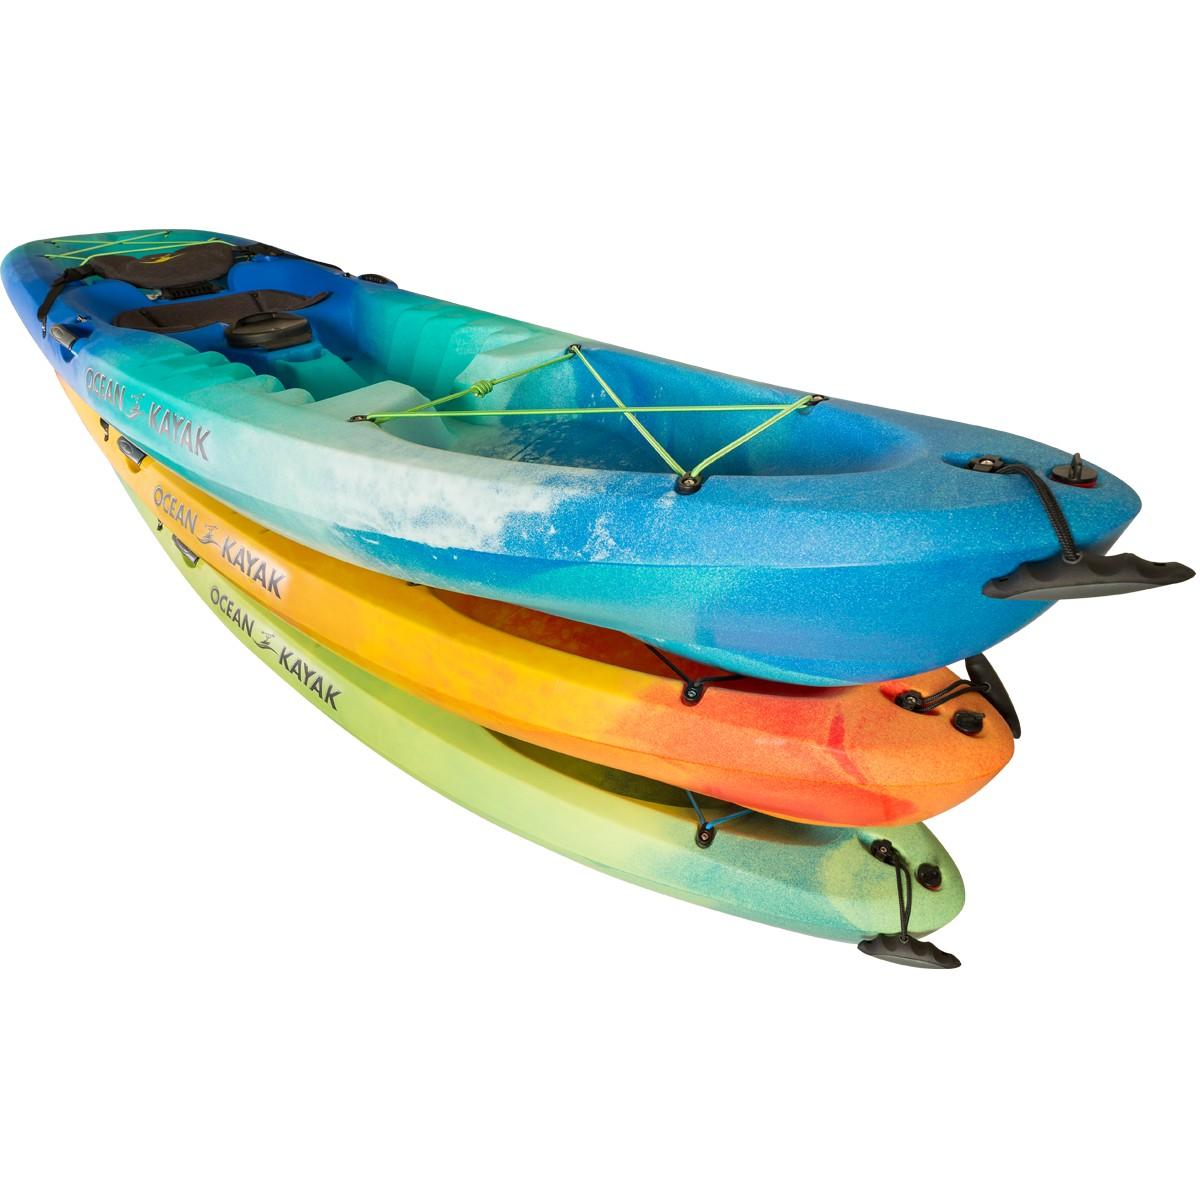 2021 New Malibu 11.5 Ocean Kayak New & Used Boats For